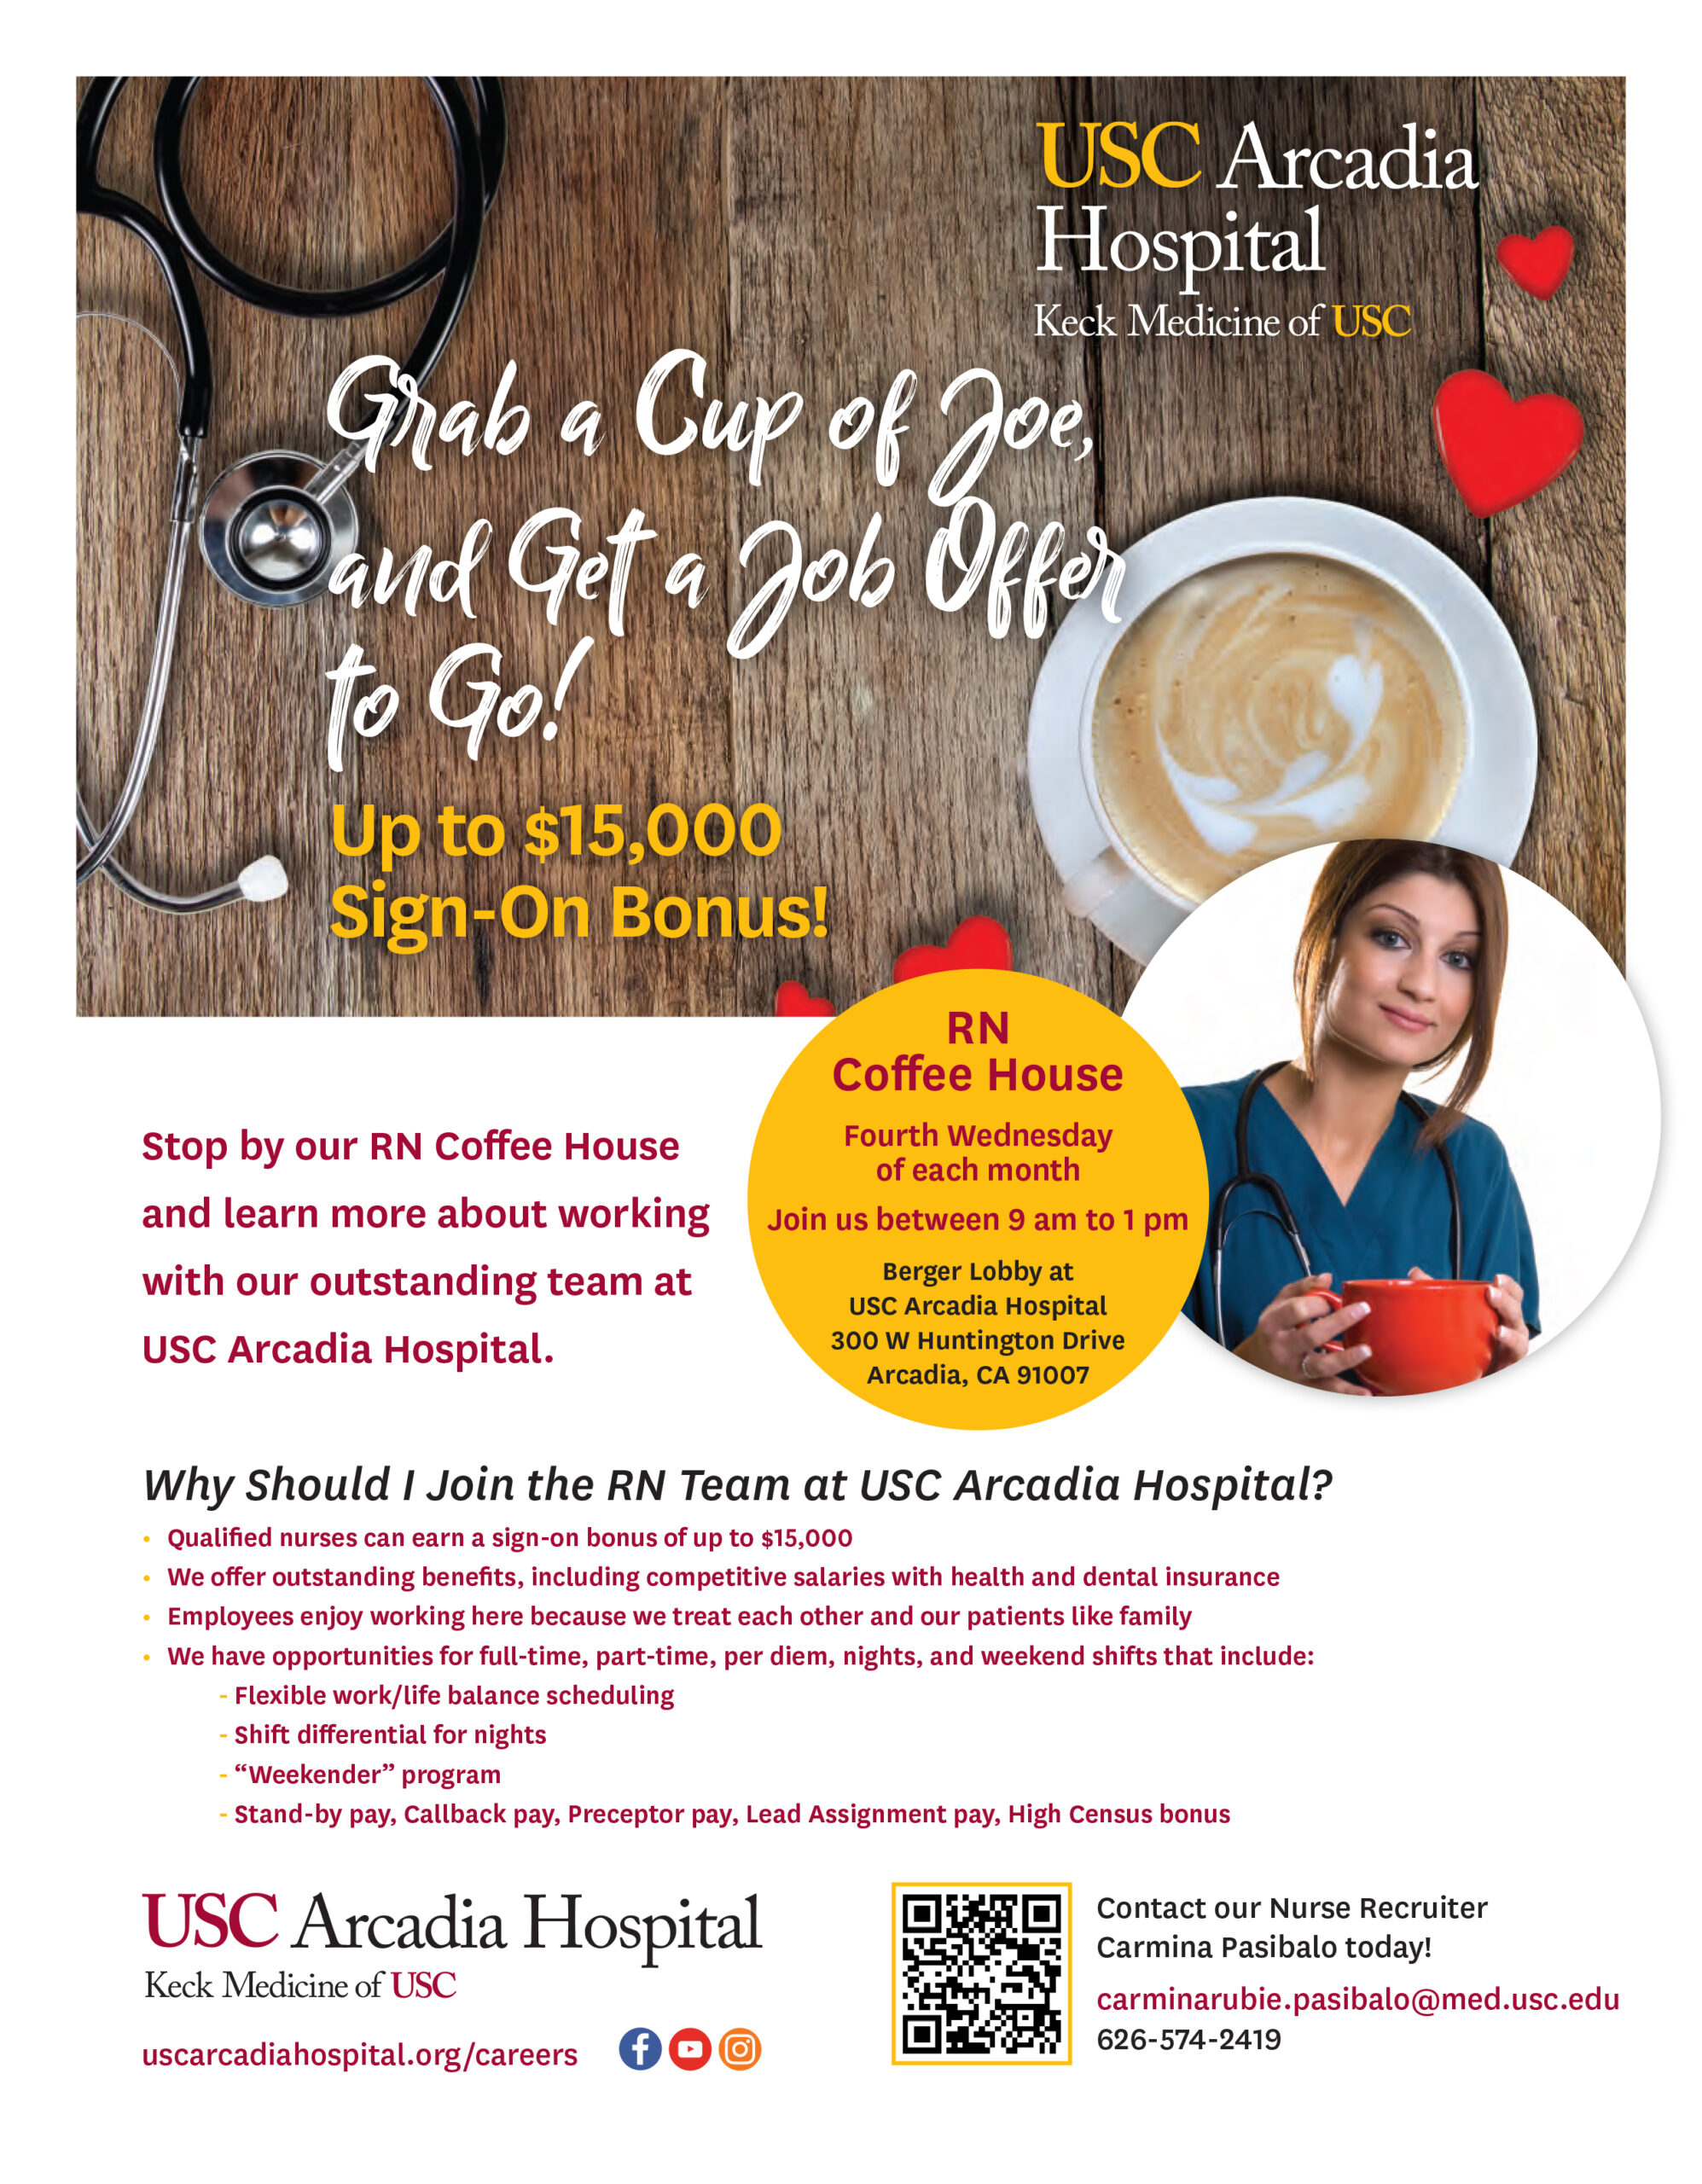 USC Arcadia Hospital RN Coffee House Job Opportunity flyer 